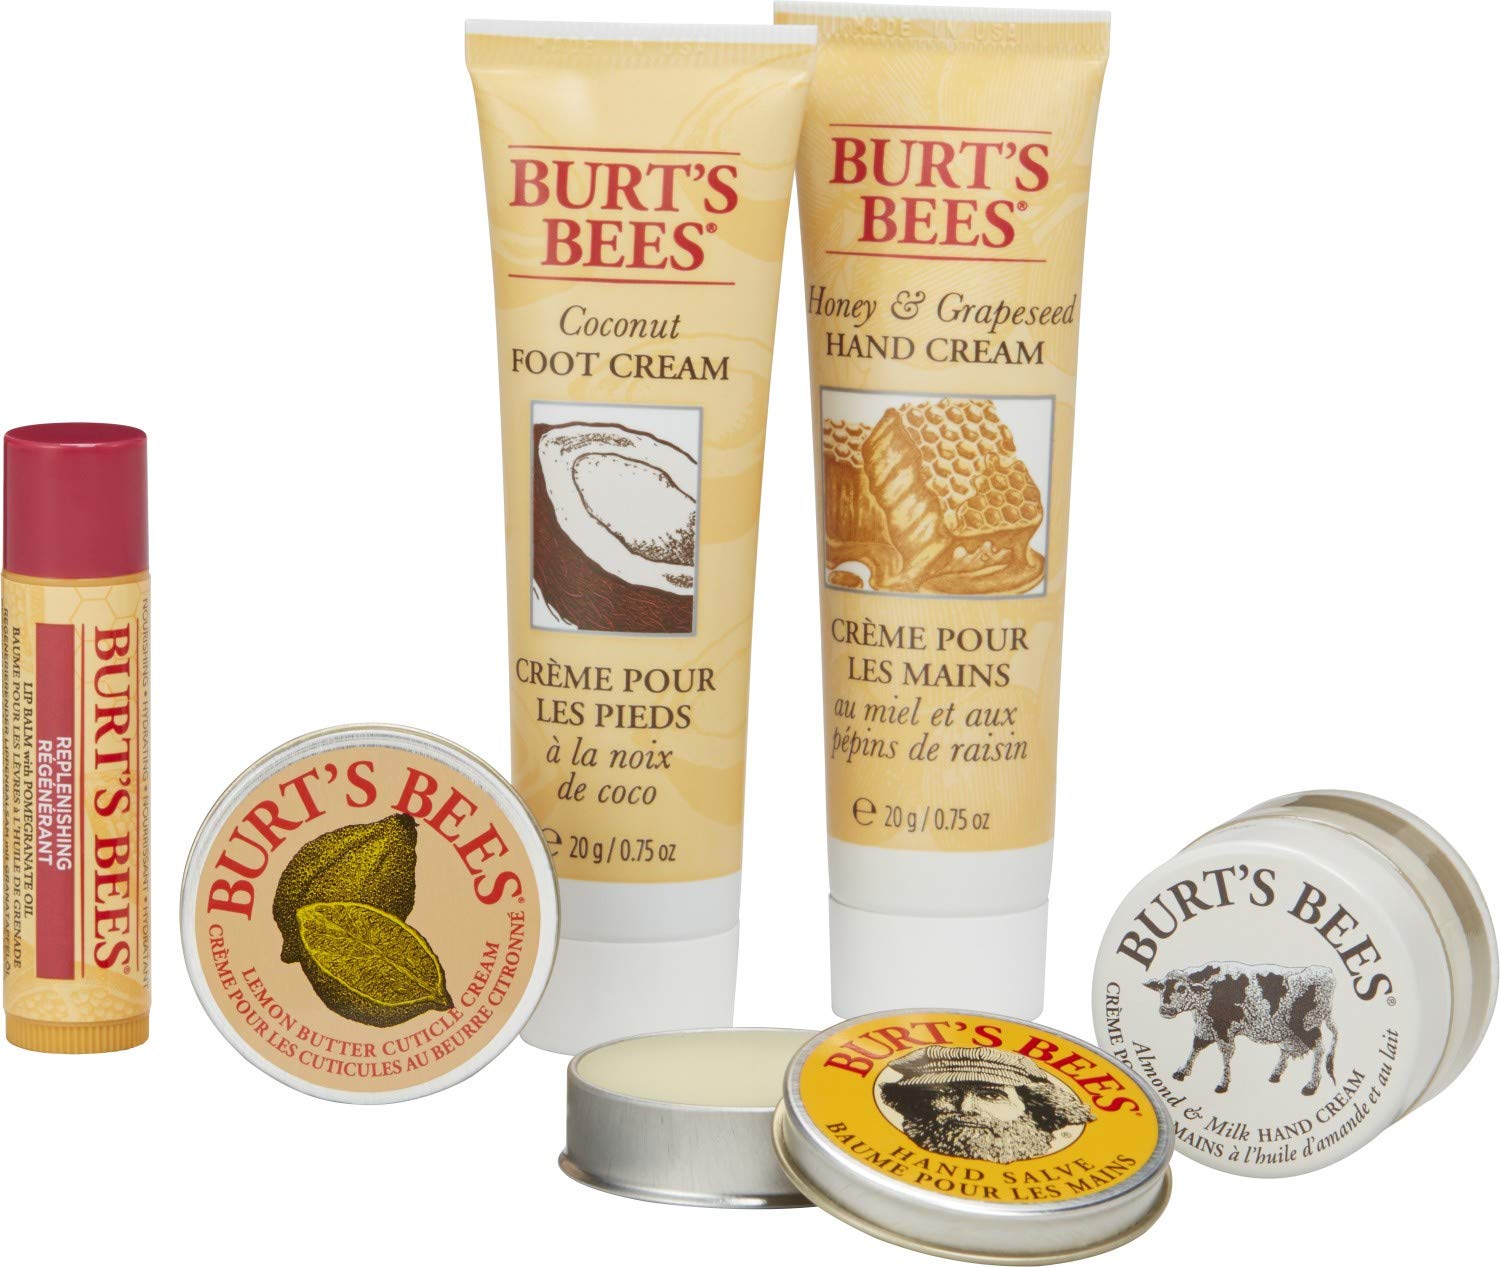 Burts Bees Skincare and Lipcare items